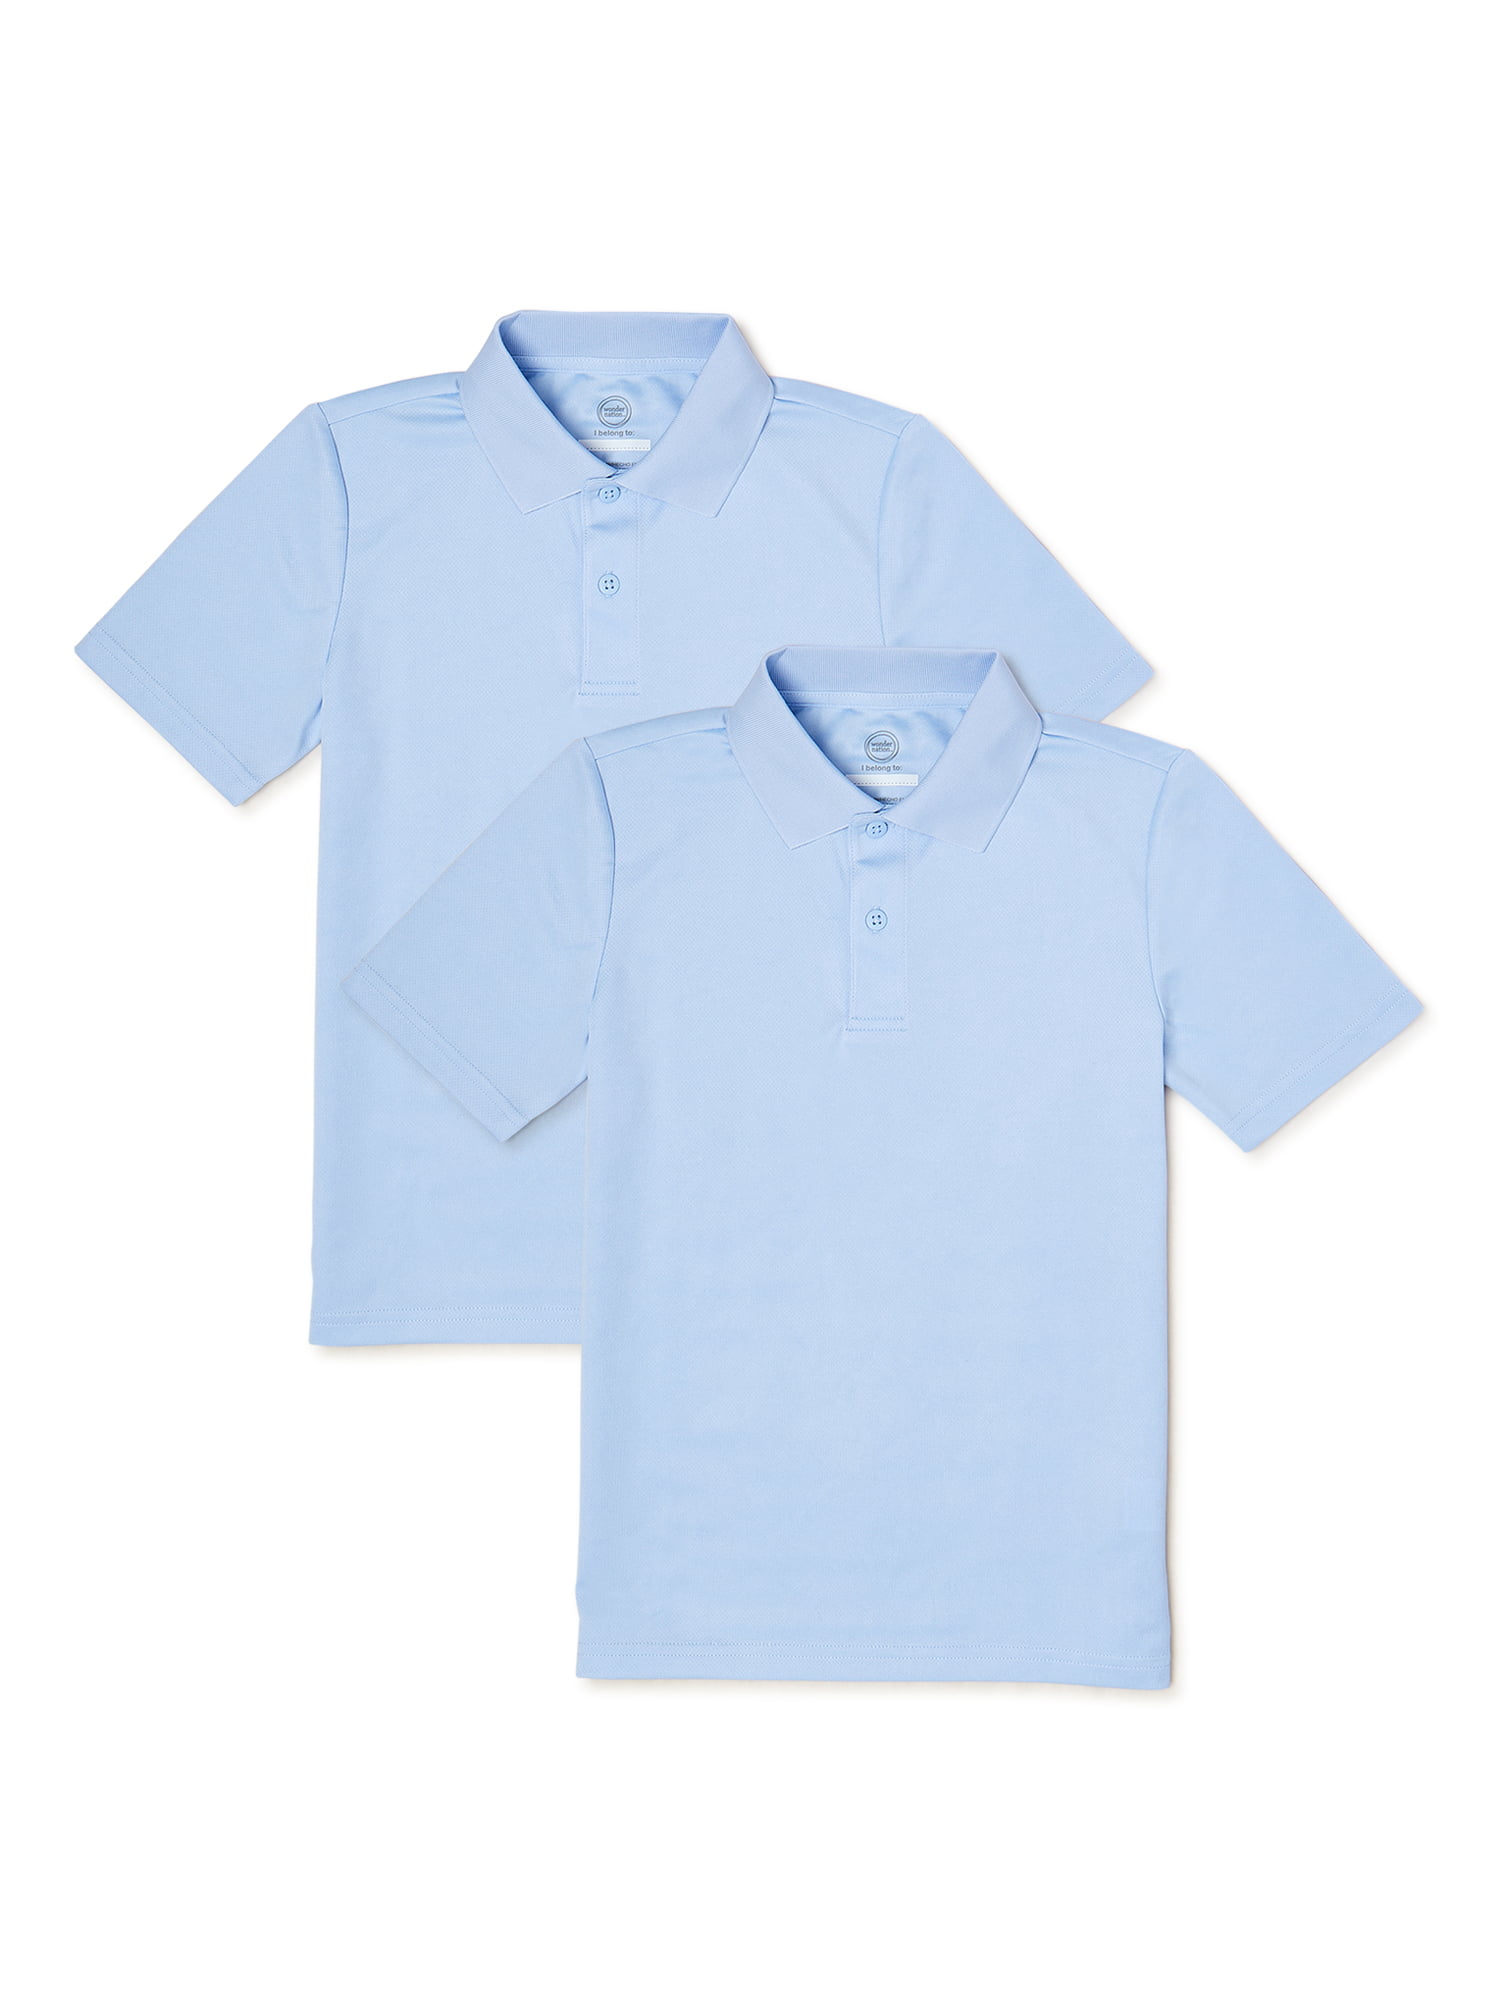 Bienzoe Boys School Uniform Breathable Short Sleeve Polo 2pcs Pack 